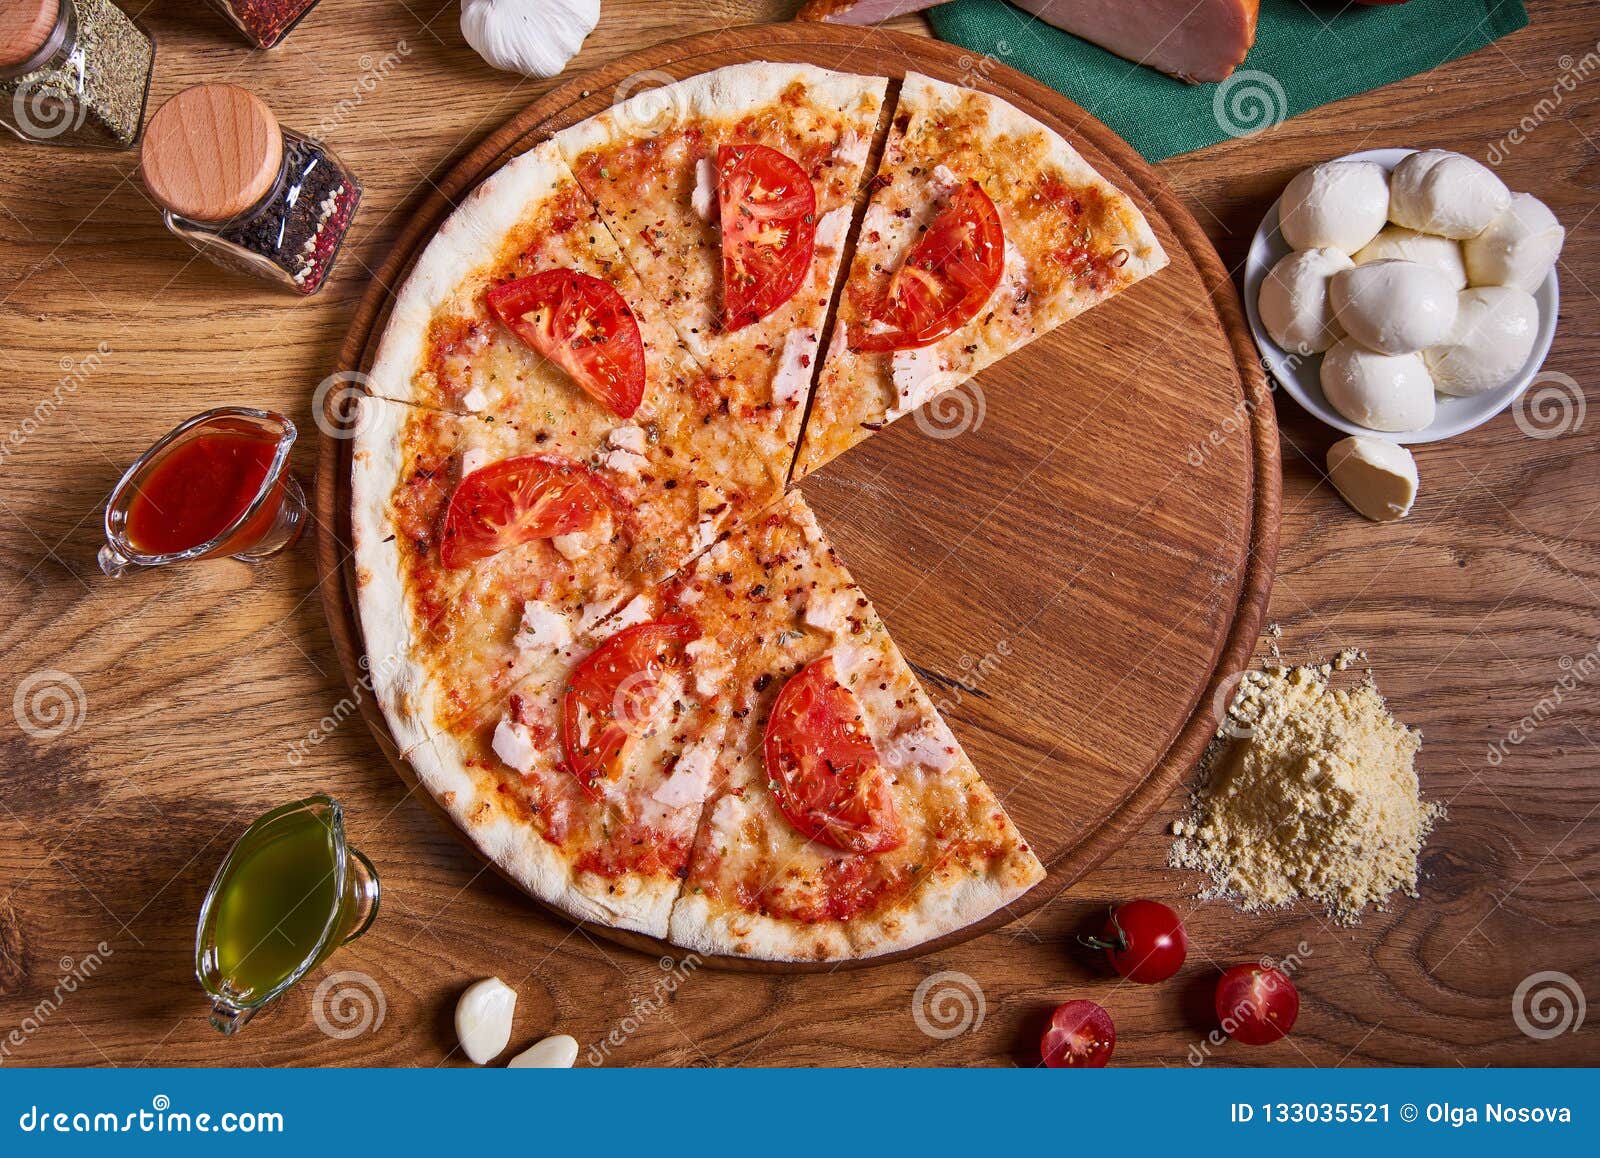 состав пиццы маргарита и пепперони фото 100